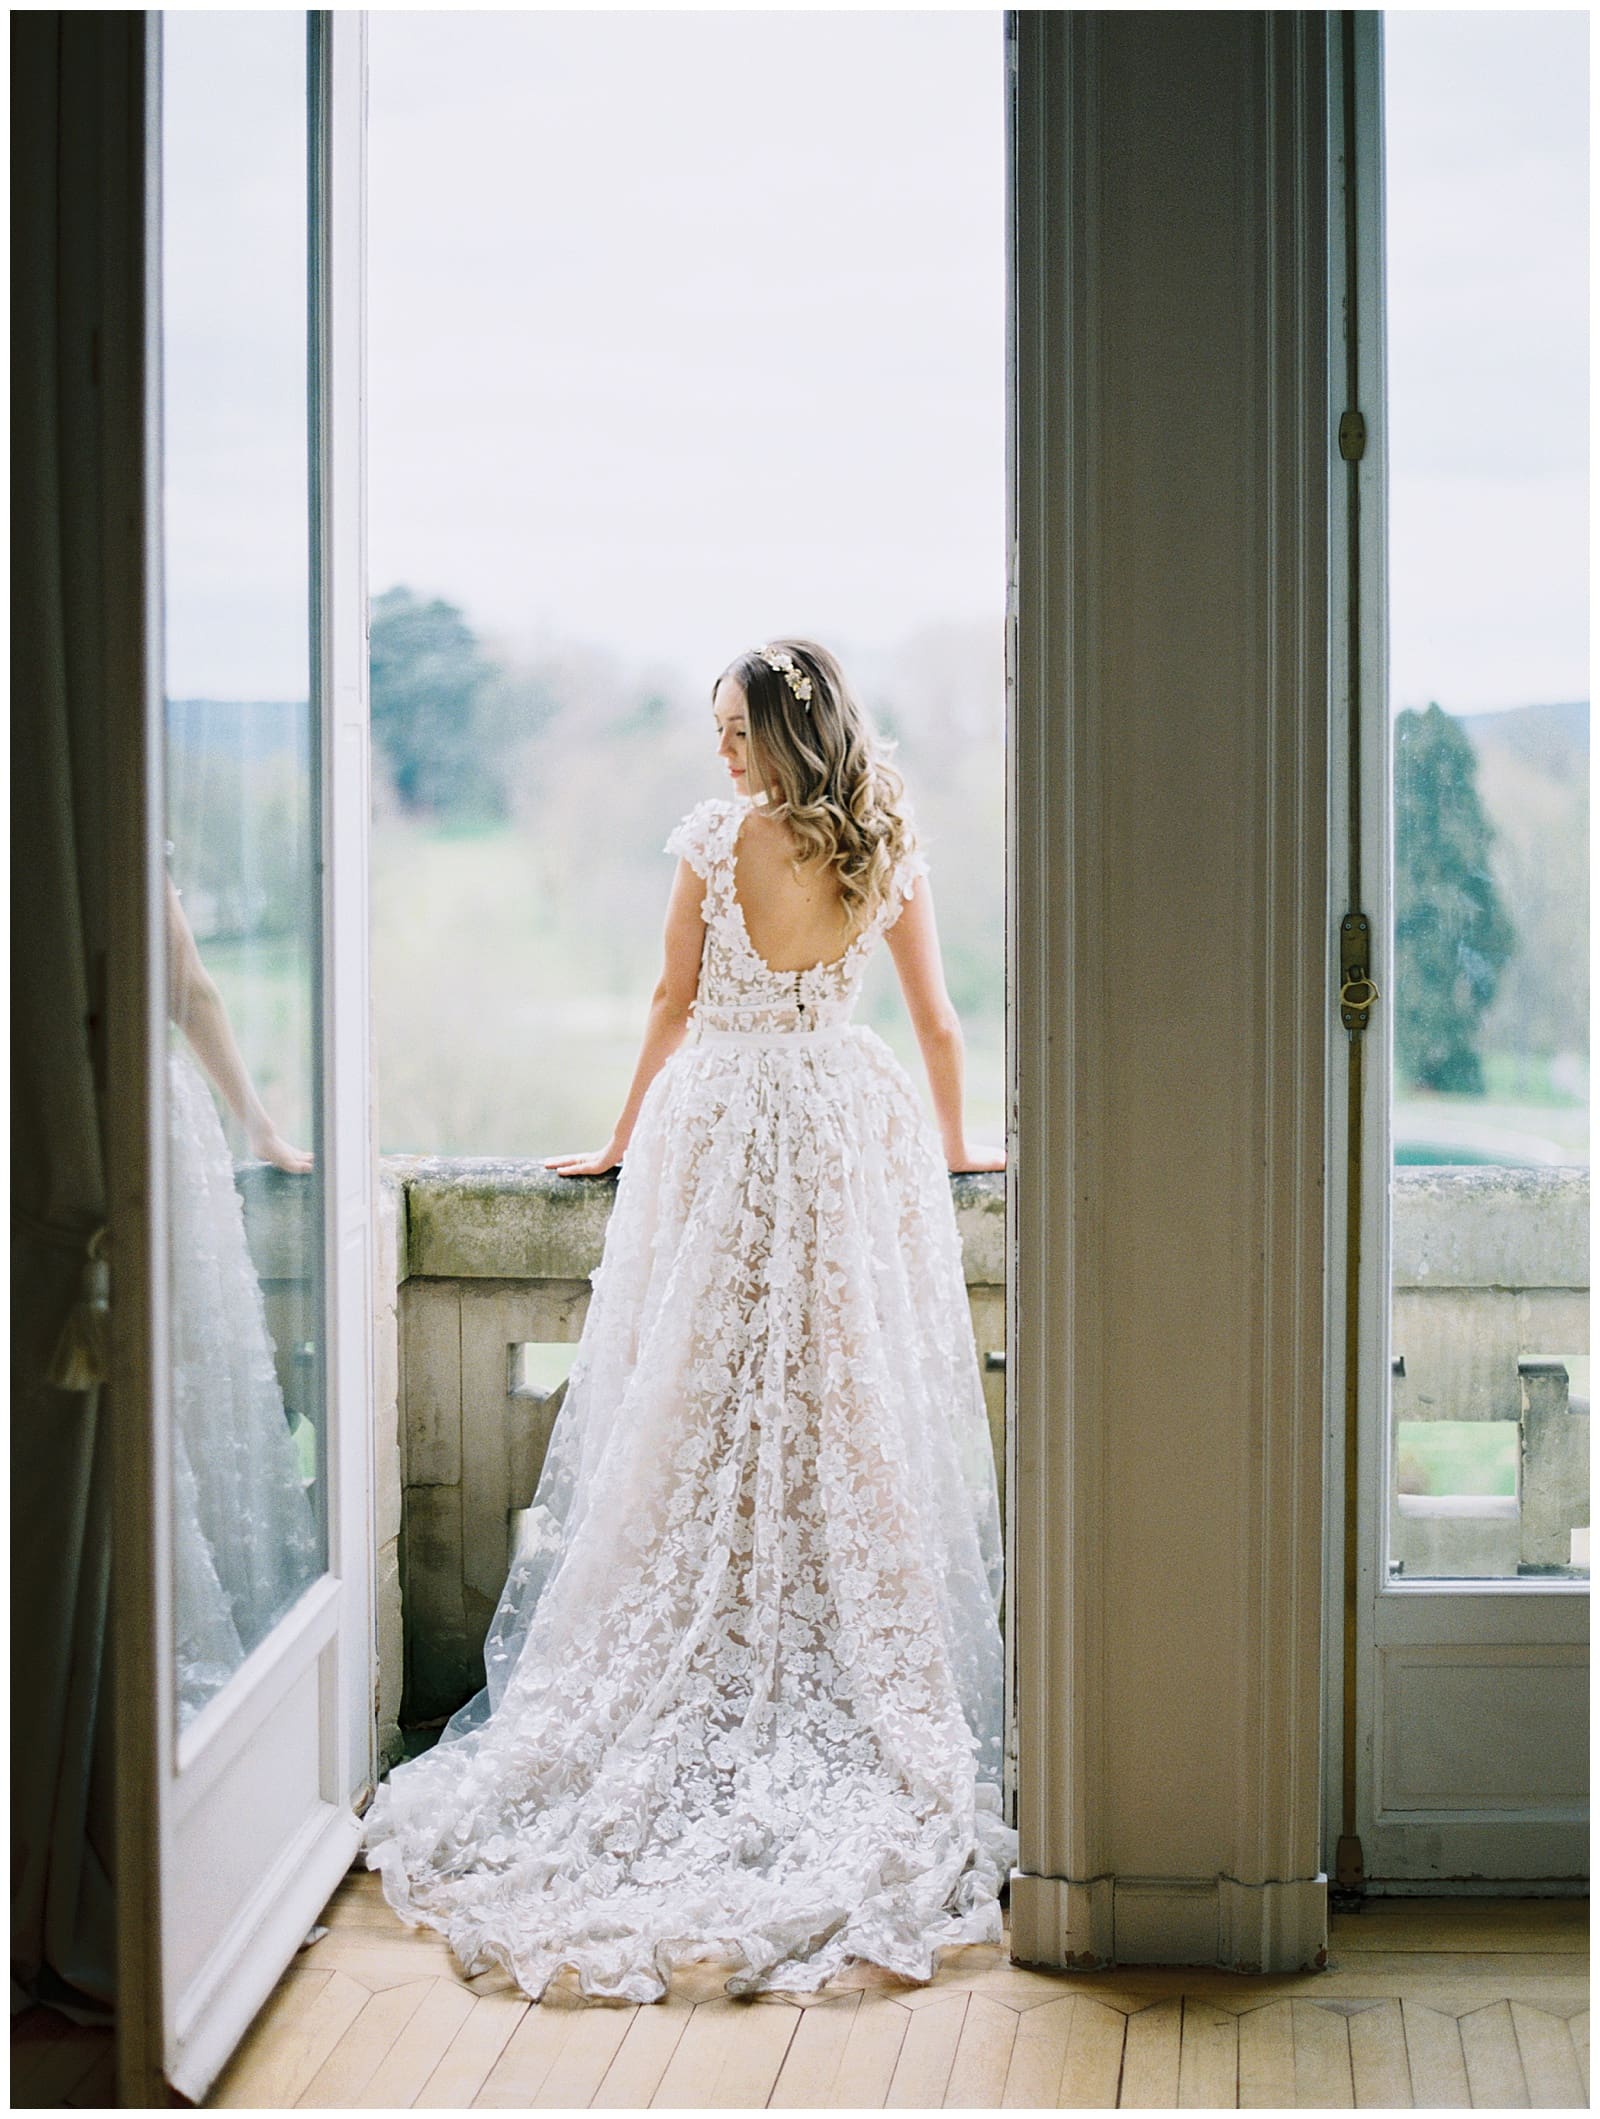 Danielle-Defayette-Photography-Chateau-Bouffemont-Wedding-Paris_0008.jpg